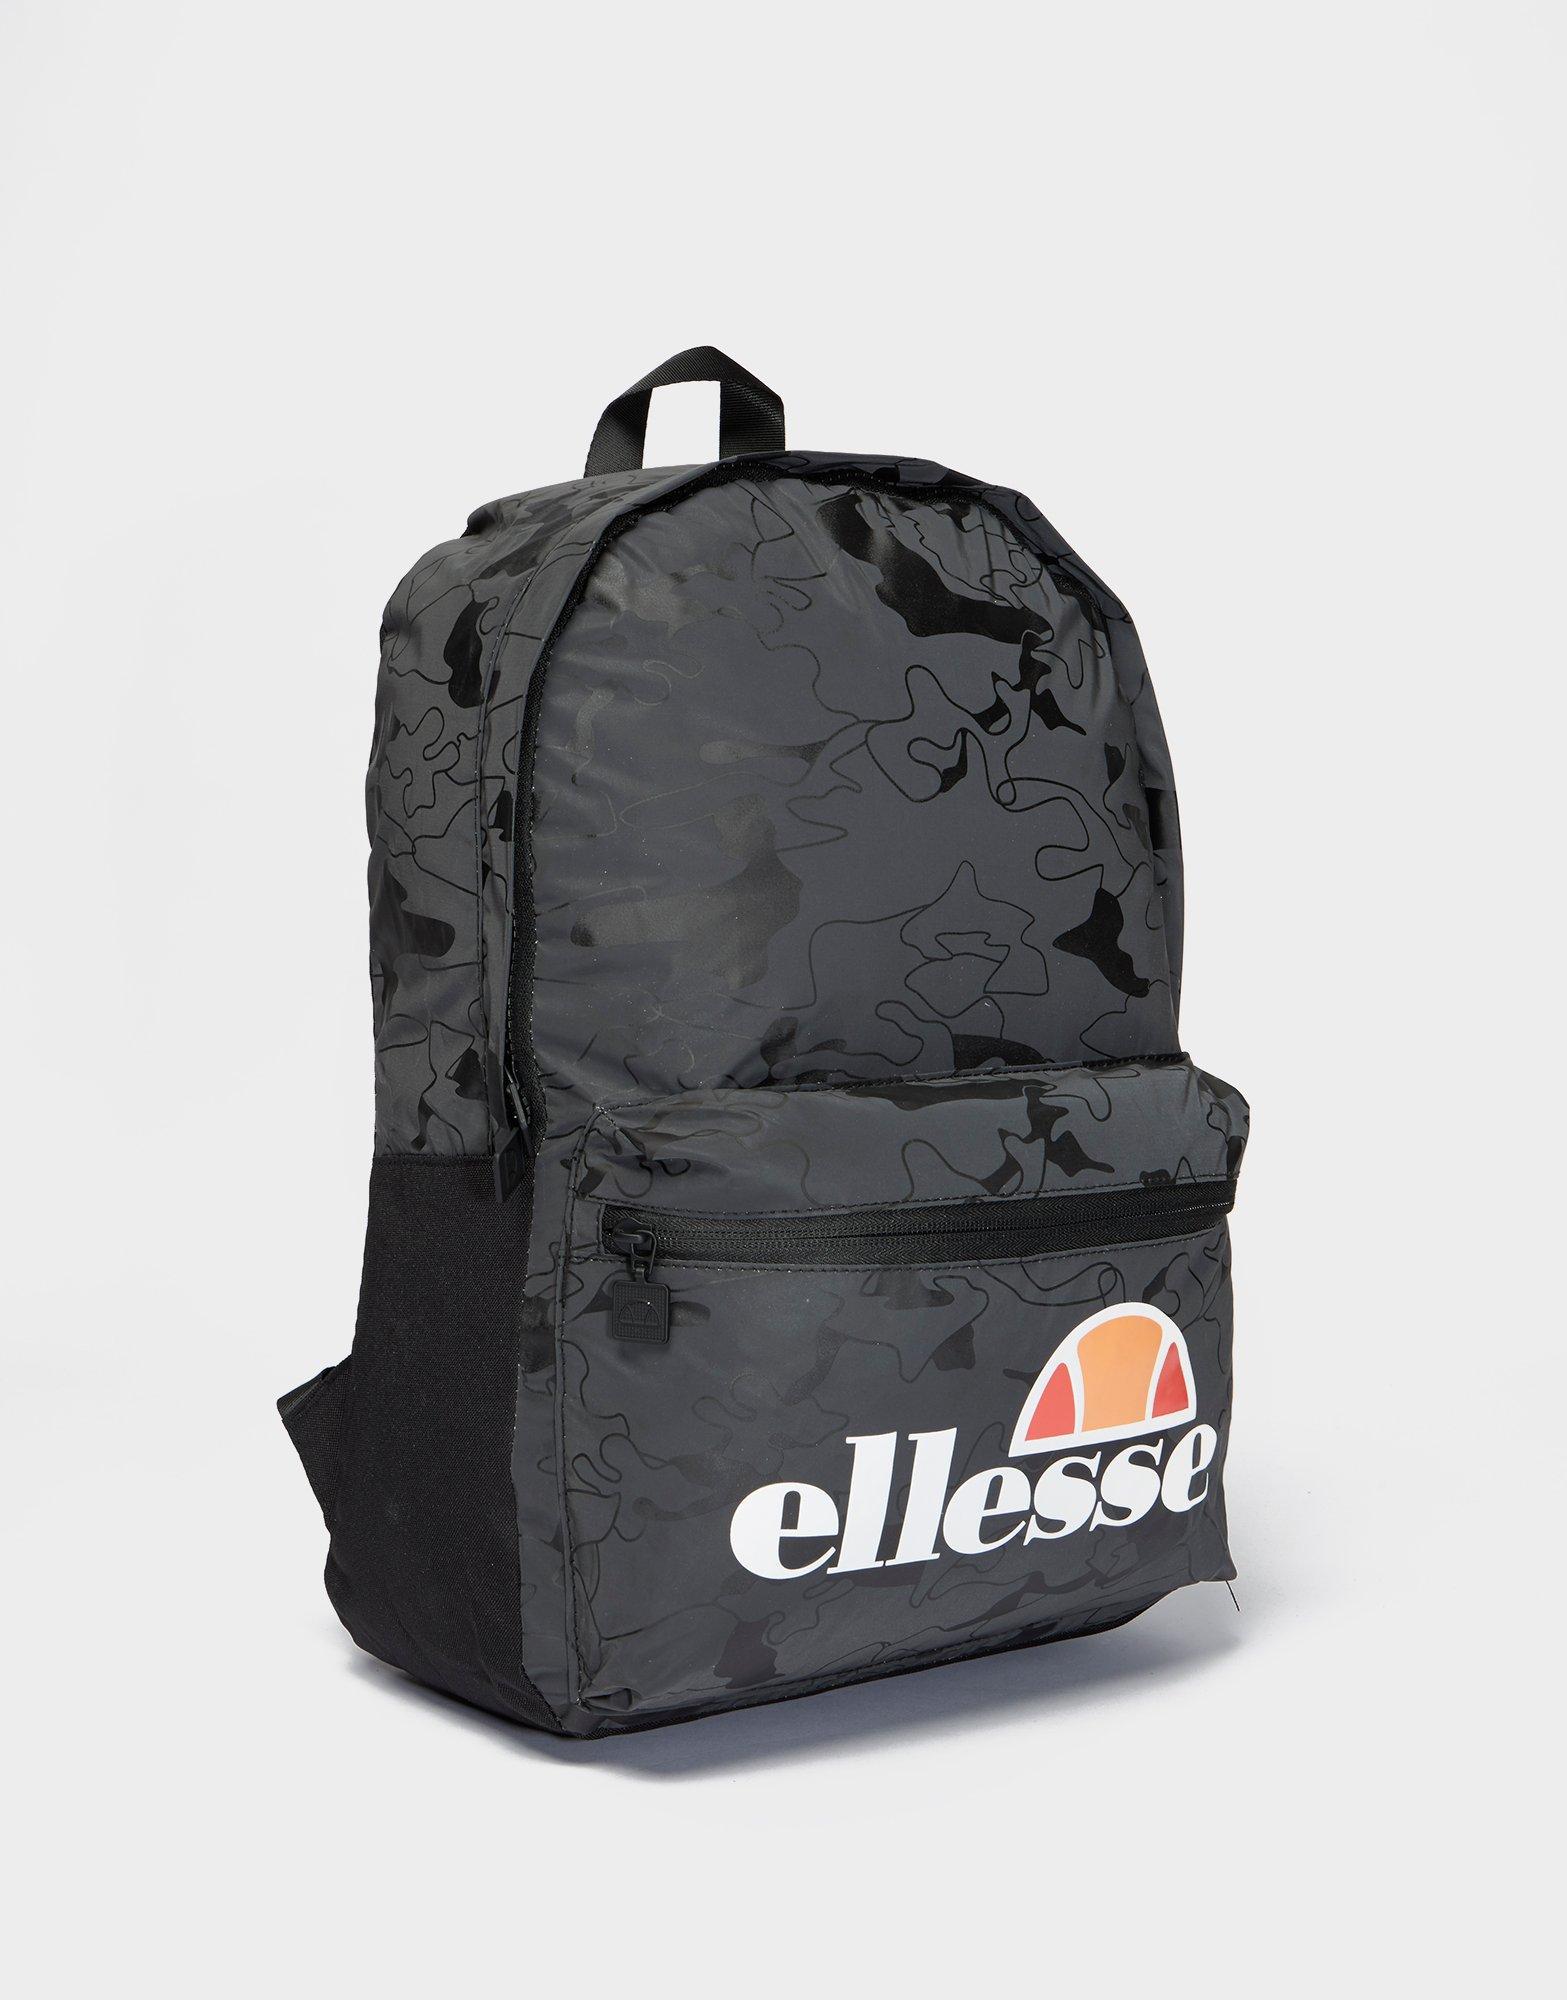 Ellesse Synthetic Camo Backpack in Black for Men - Lyst